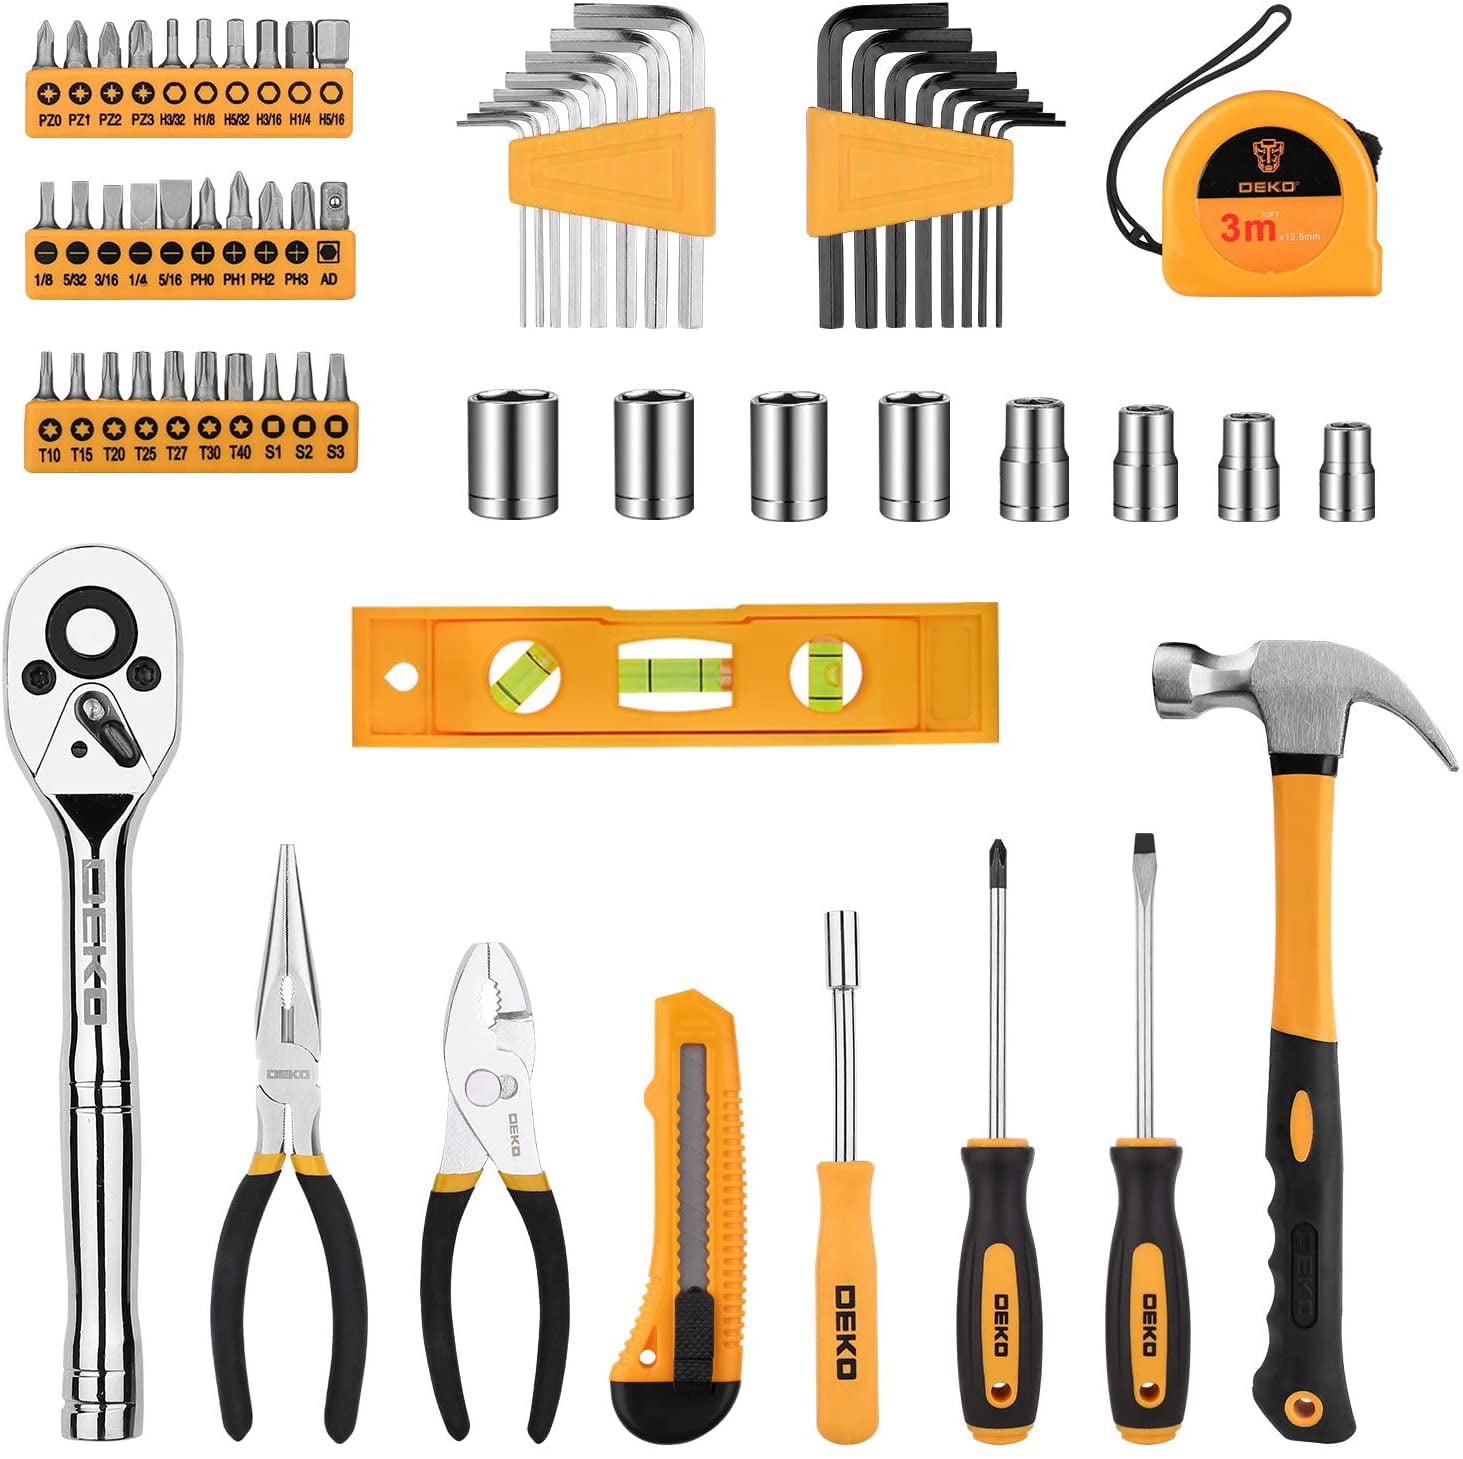 DEKO 65 Pcs Tool Set General Household Hand Tool Kit With Plastic ToolBox Case 